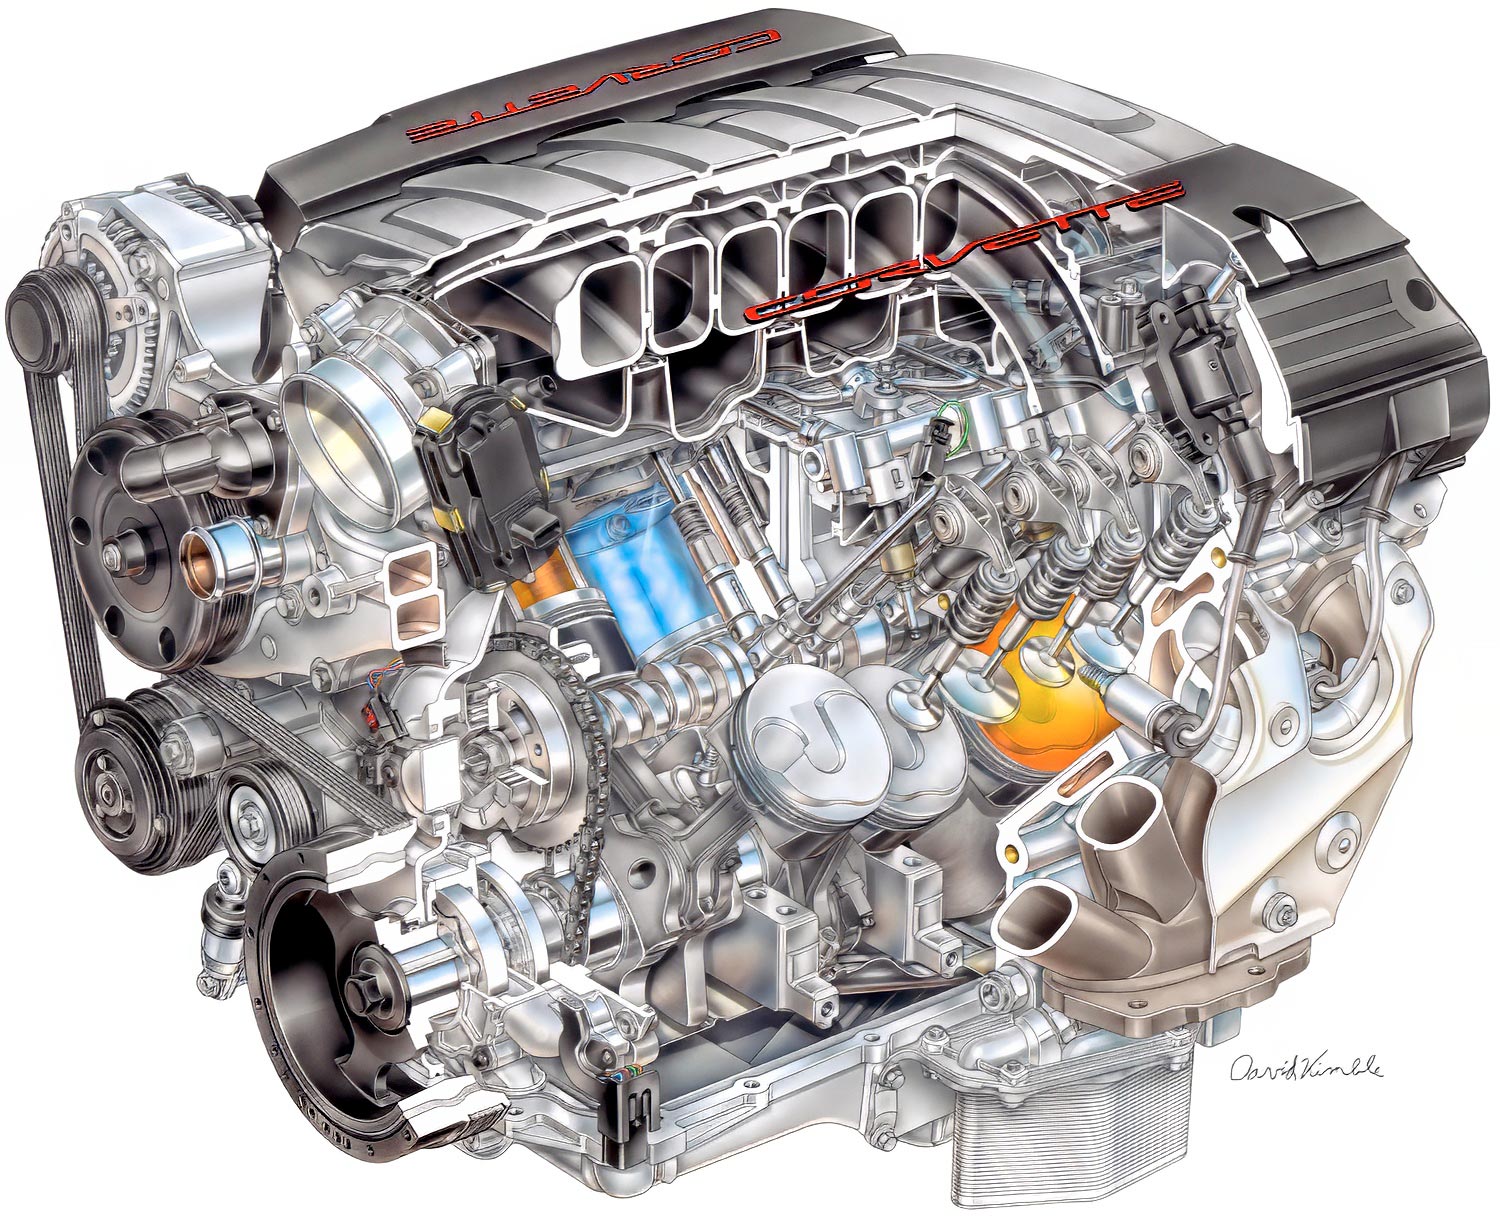 1992 Corvette LT1 Engine Cutaway illustration by David Kimble